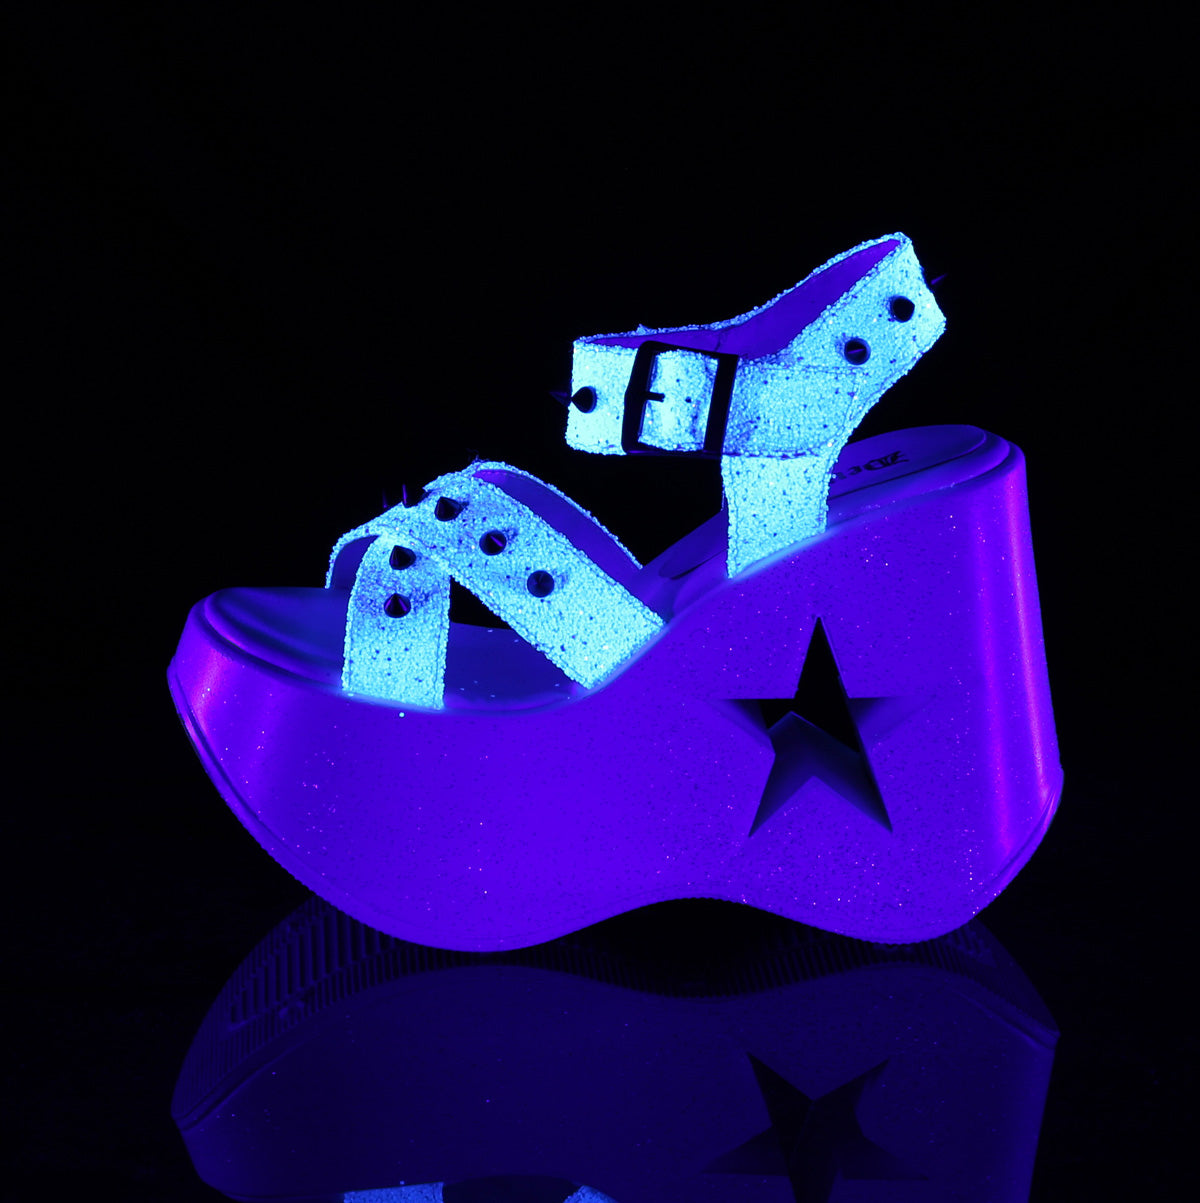 Midnight Star Wedge Platform Sandal White Glitter